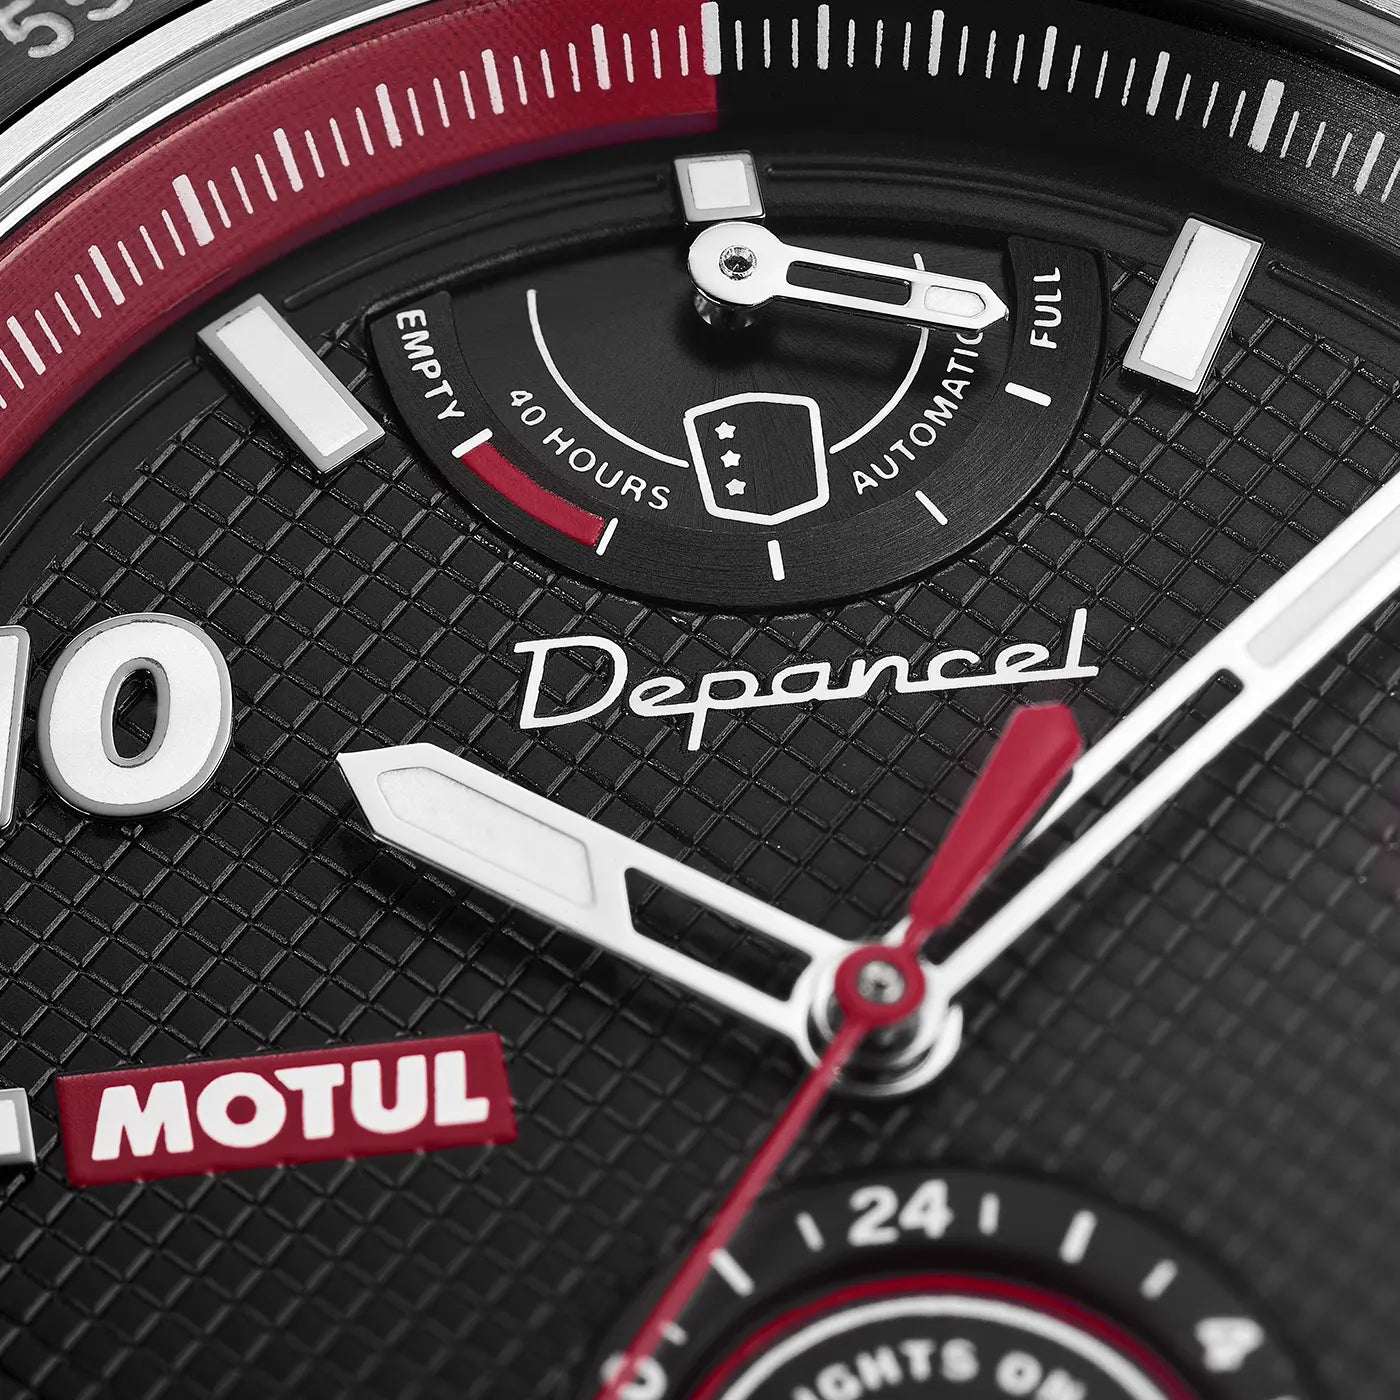 Hands-On - The New Depancel Serie-P Pista 24 MOTUL Edition (Price)